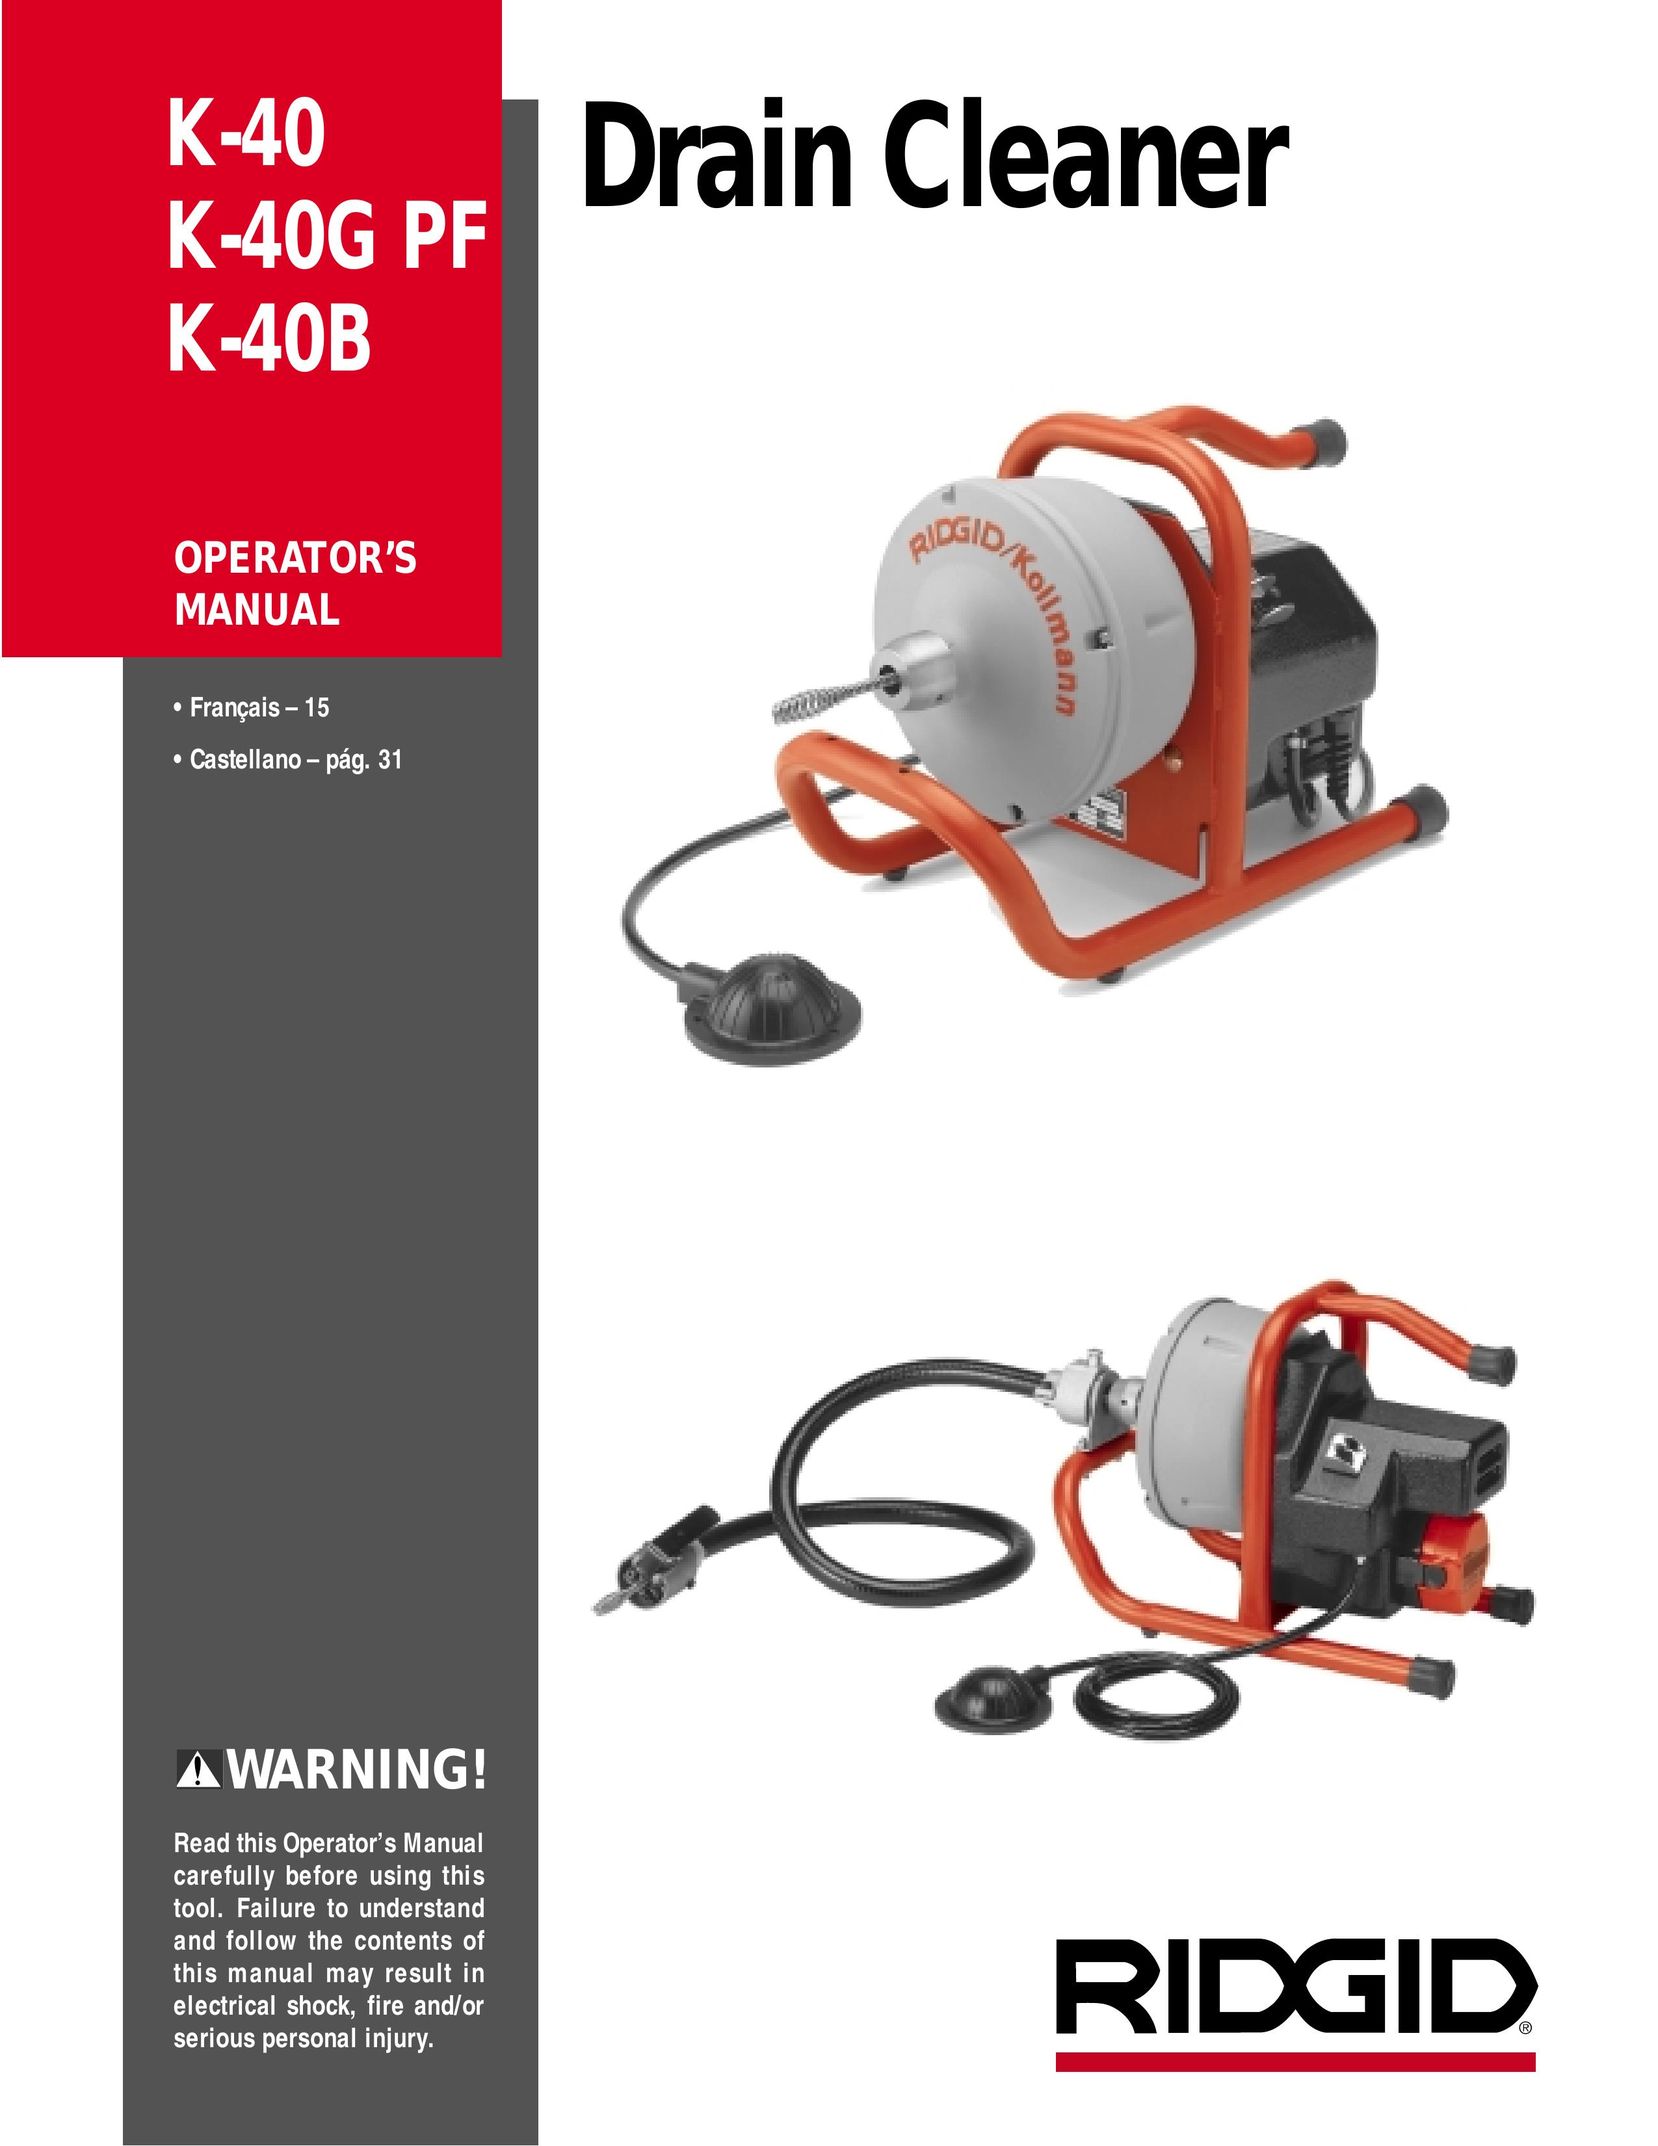 RIDGID K-40 Plumbing Product User Manual